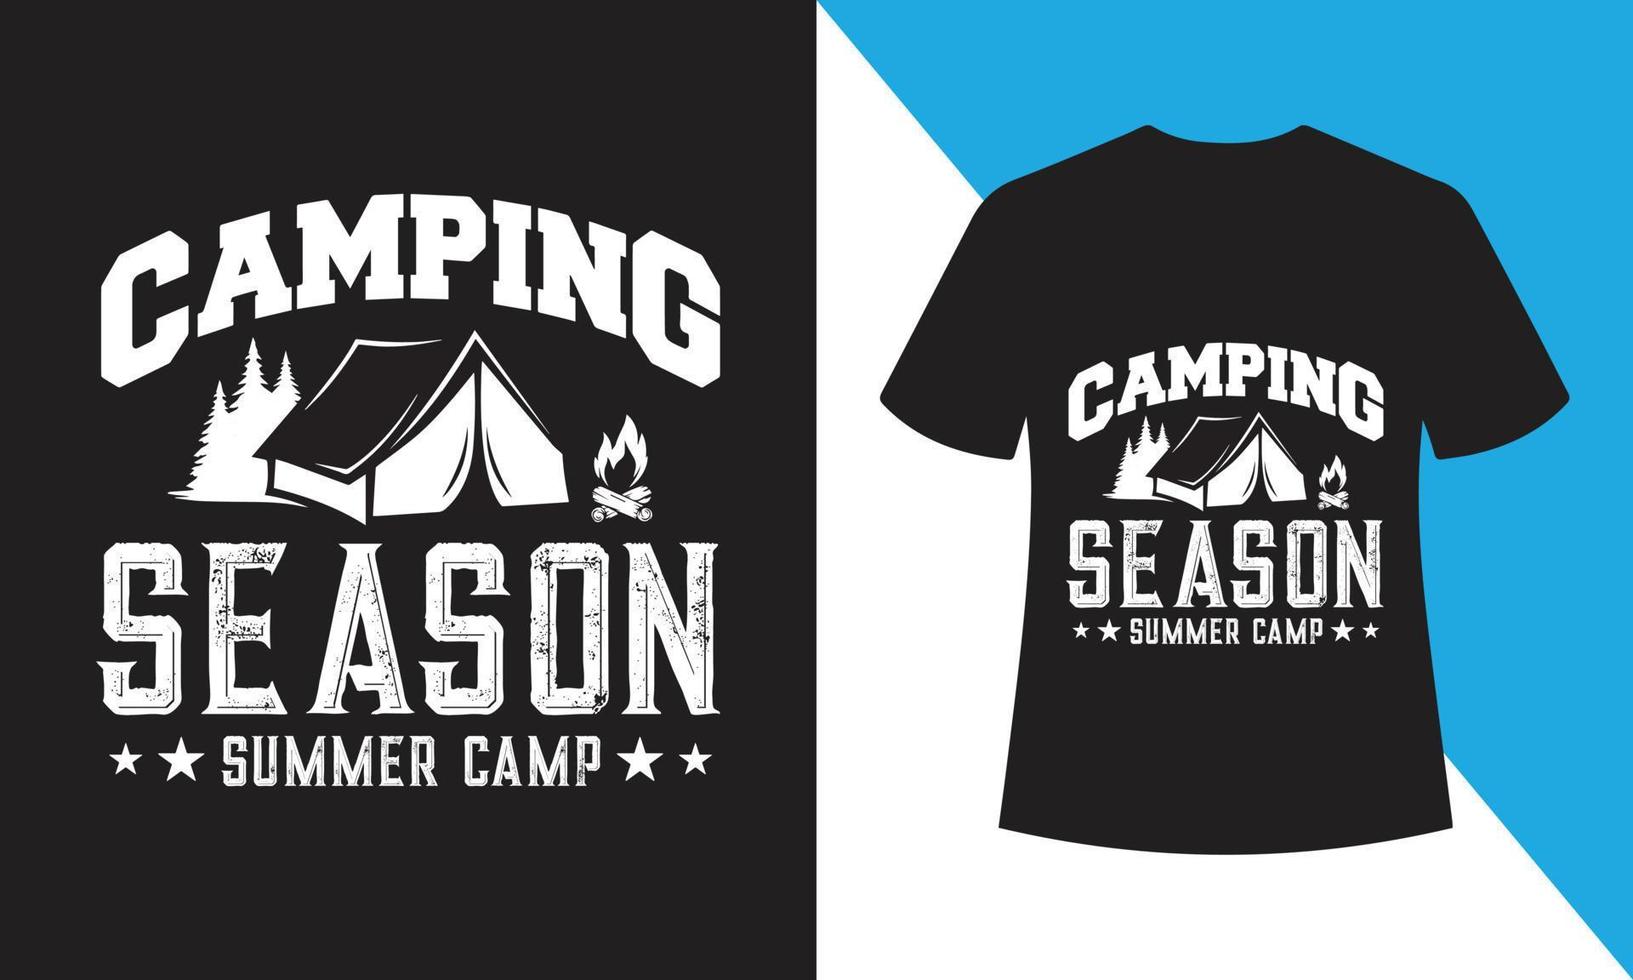 Camping season summer camp t-shirt design vector